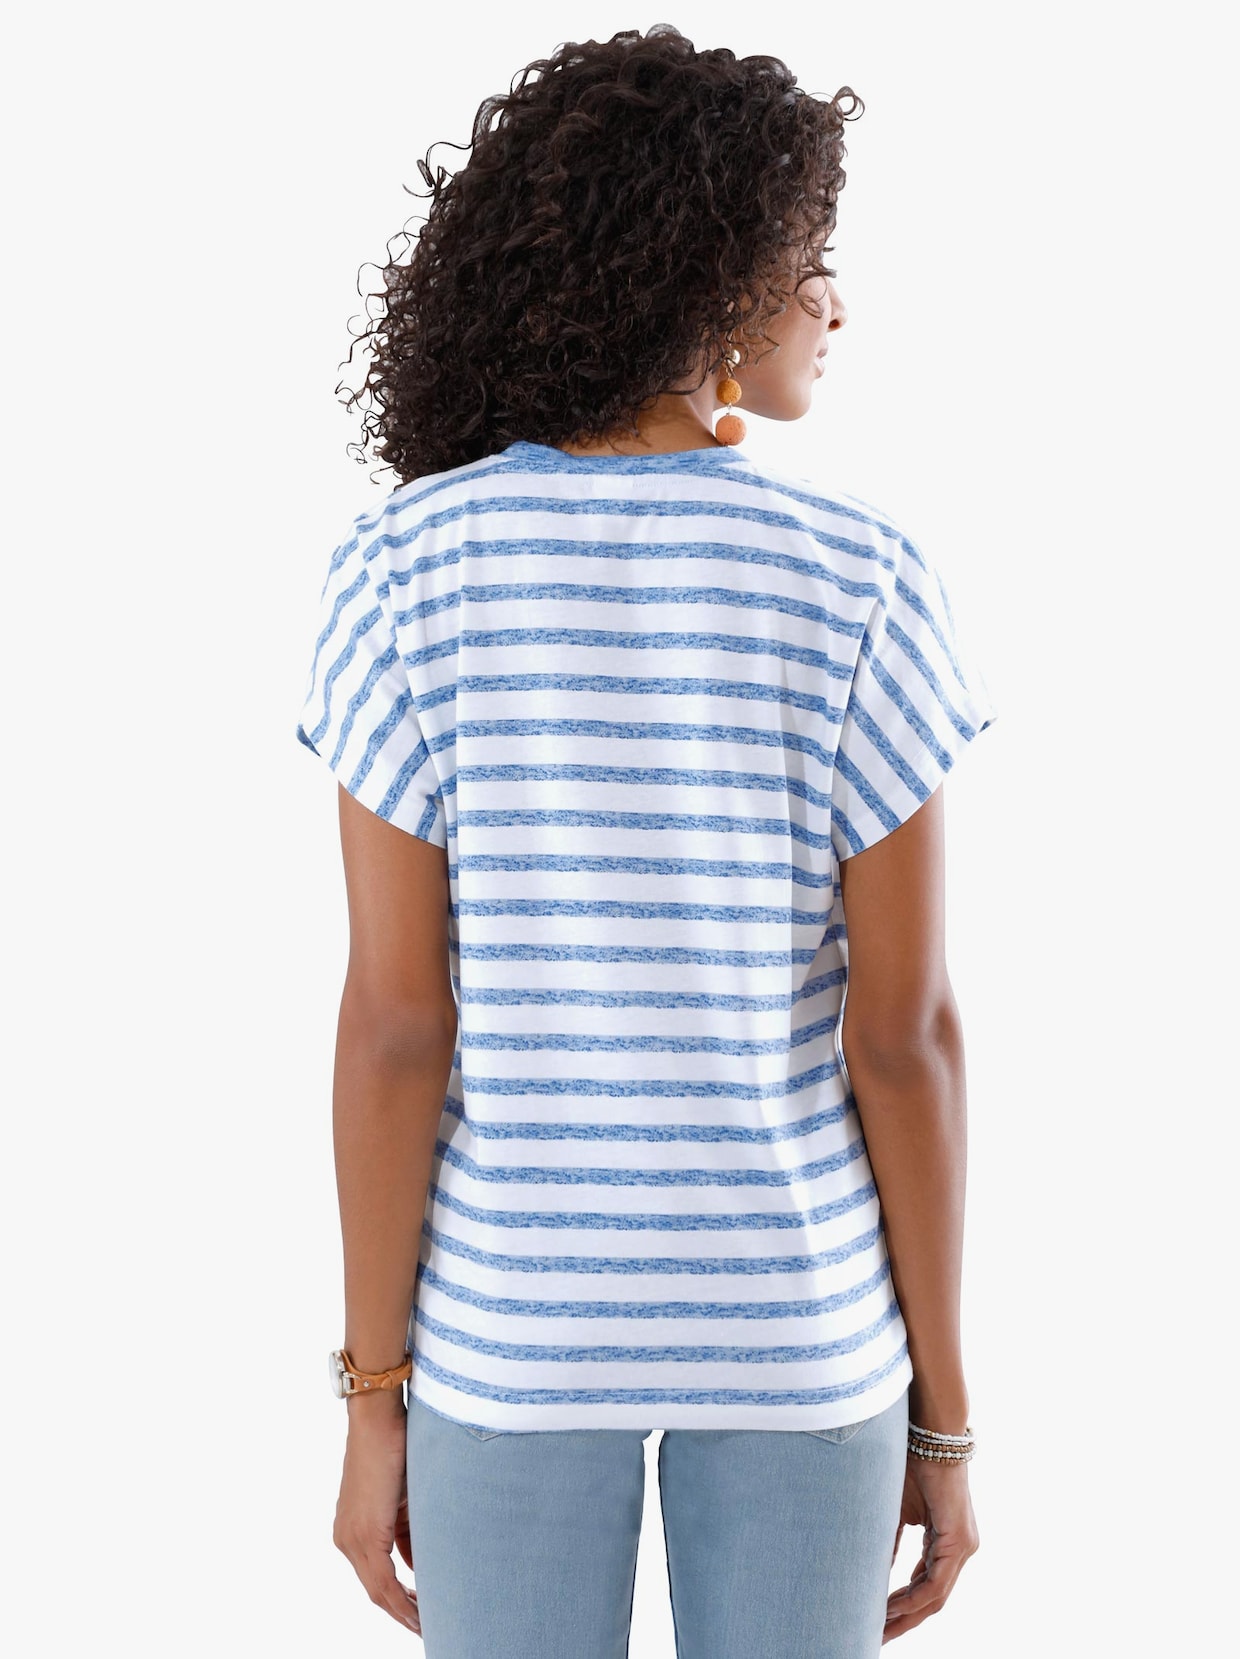 Print-Shirt - jeansblau-gestreift